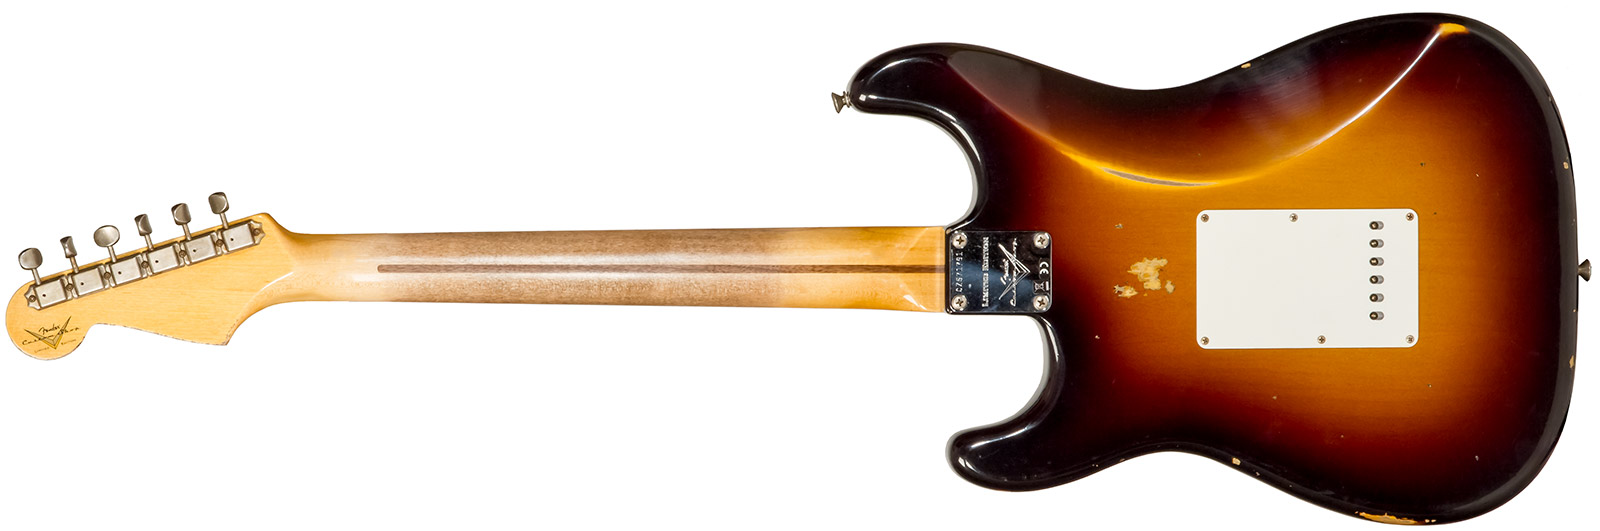 Fender Custom Shop Strat 1957 3s Trem Mn #cz571791 - Relic Wide Fade 2-color Sunburst - Guitare Électrique Forme Str - Variation 1